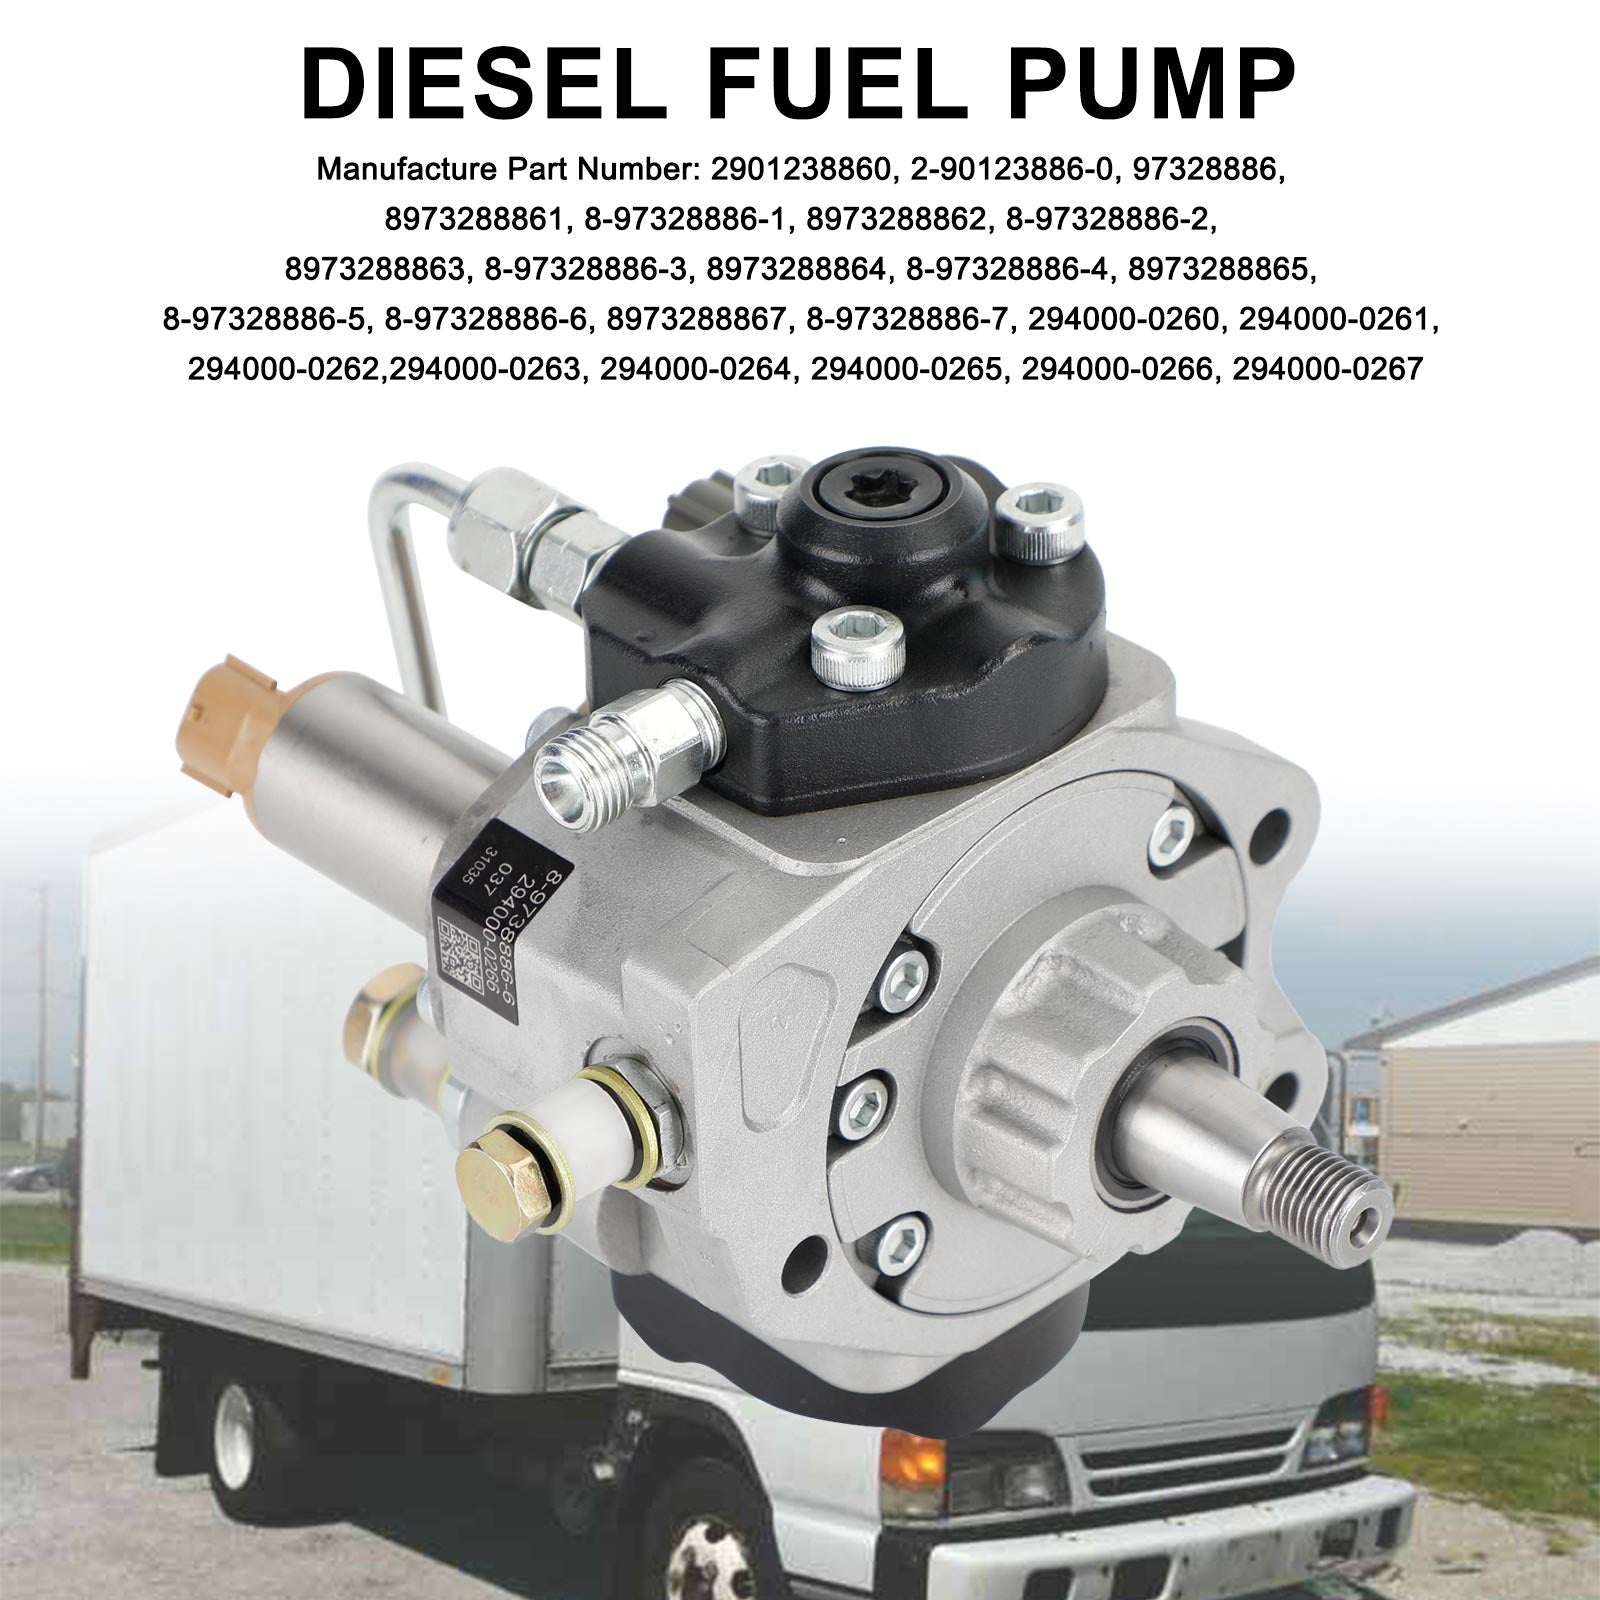 Pompa carburante 294000-0266 Fit Isuzu 2004-2007 5.2L NPR 4HK1 Diesel 2940000267